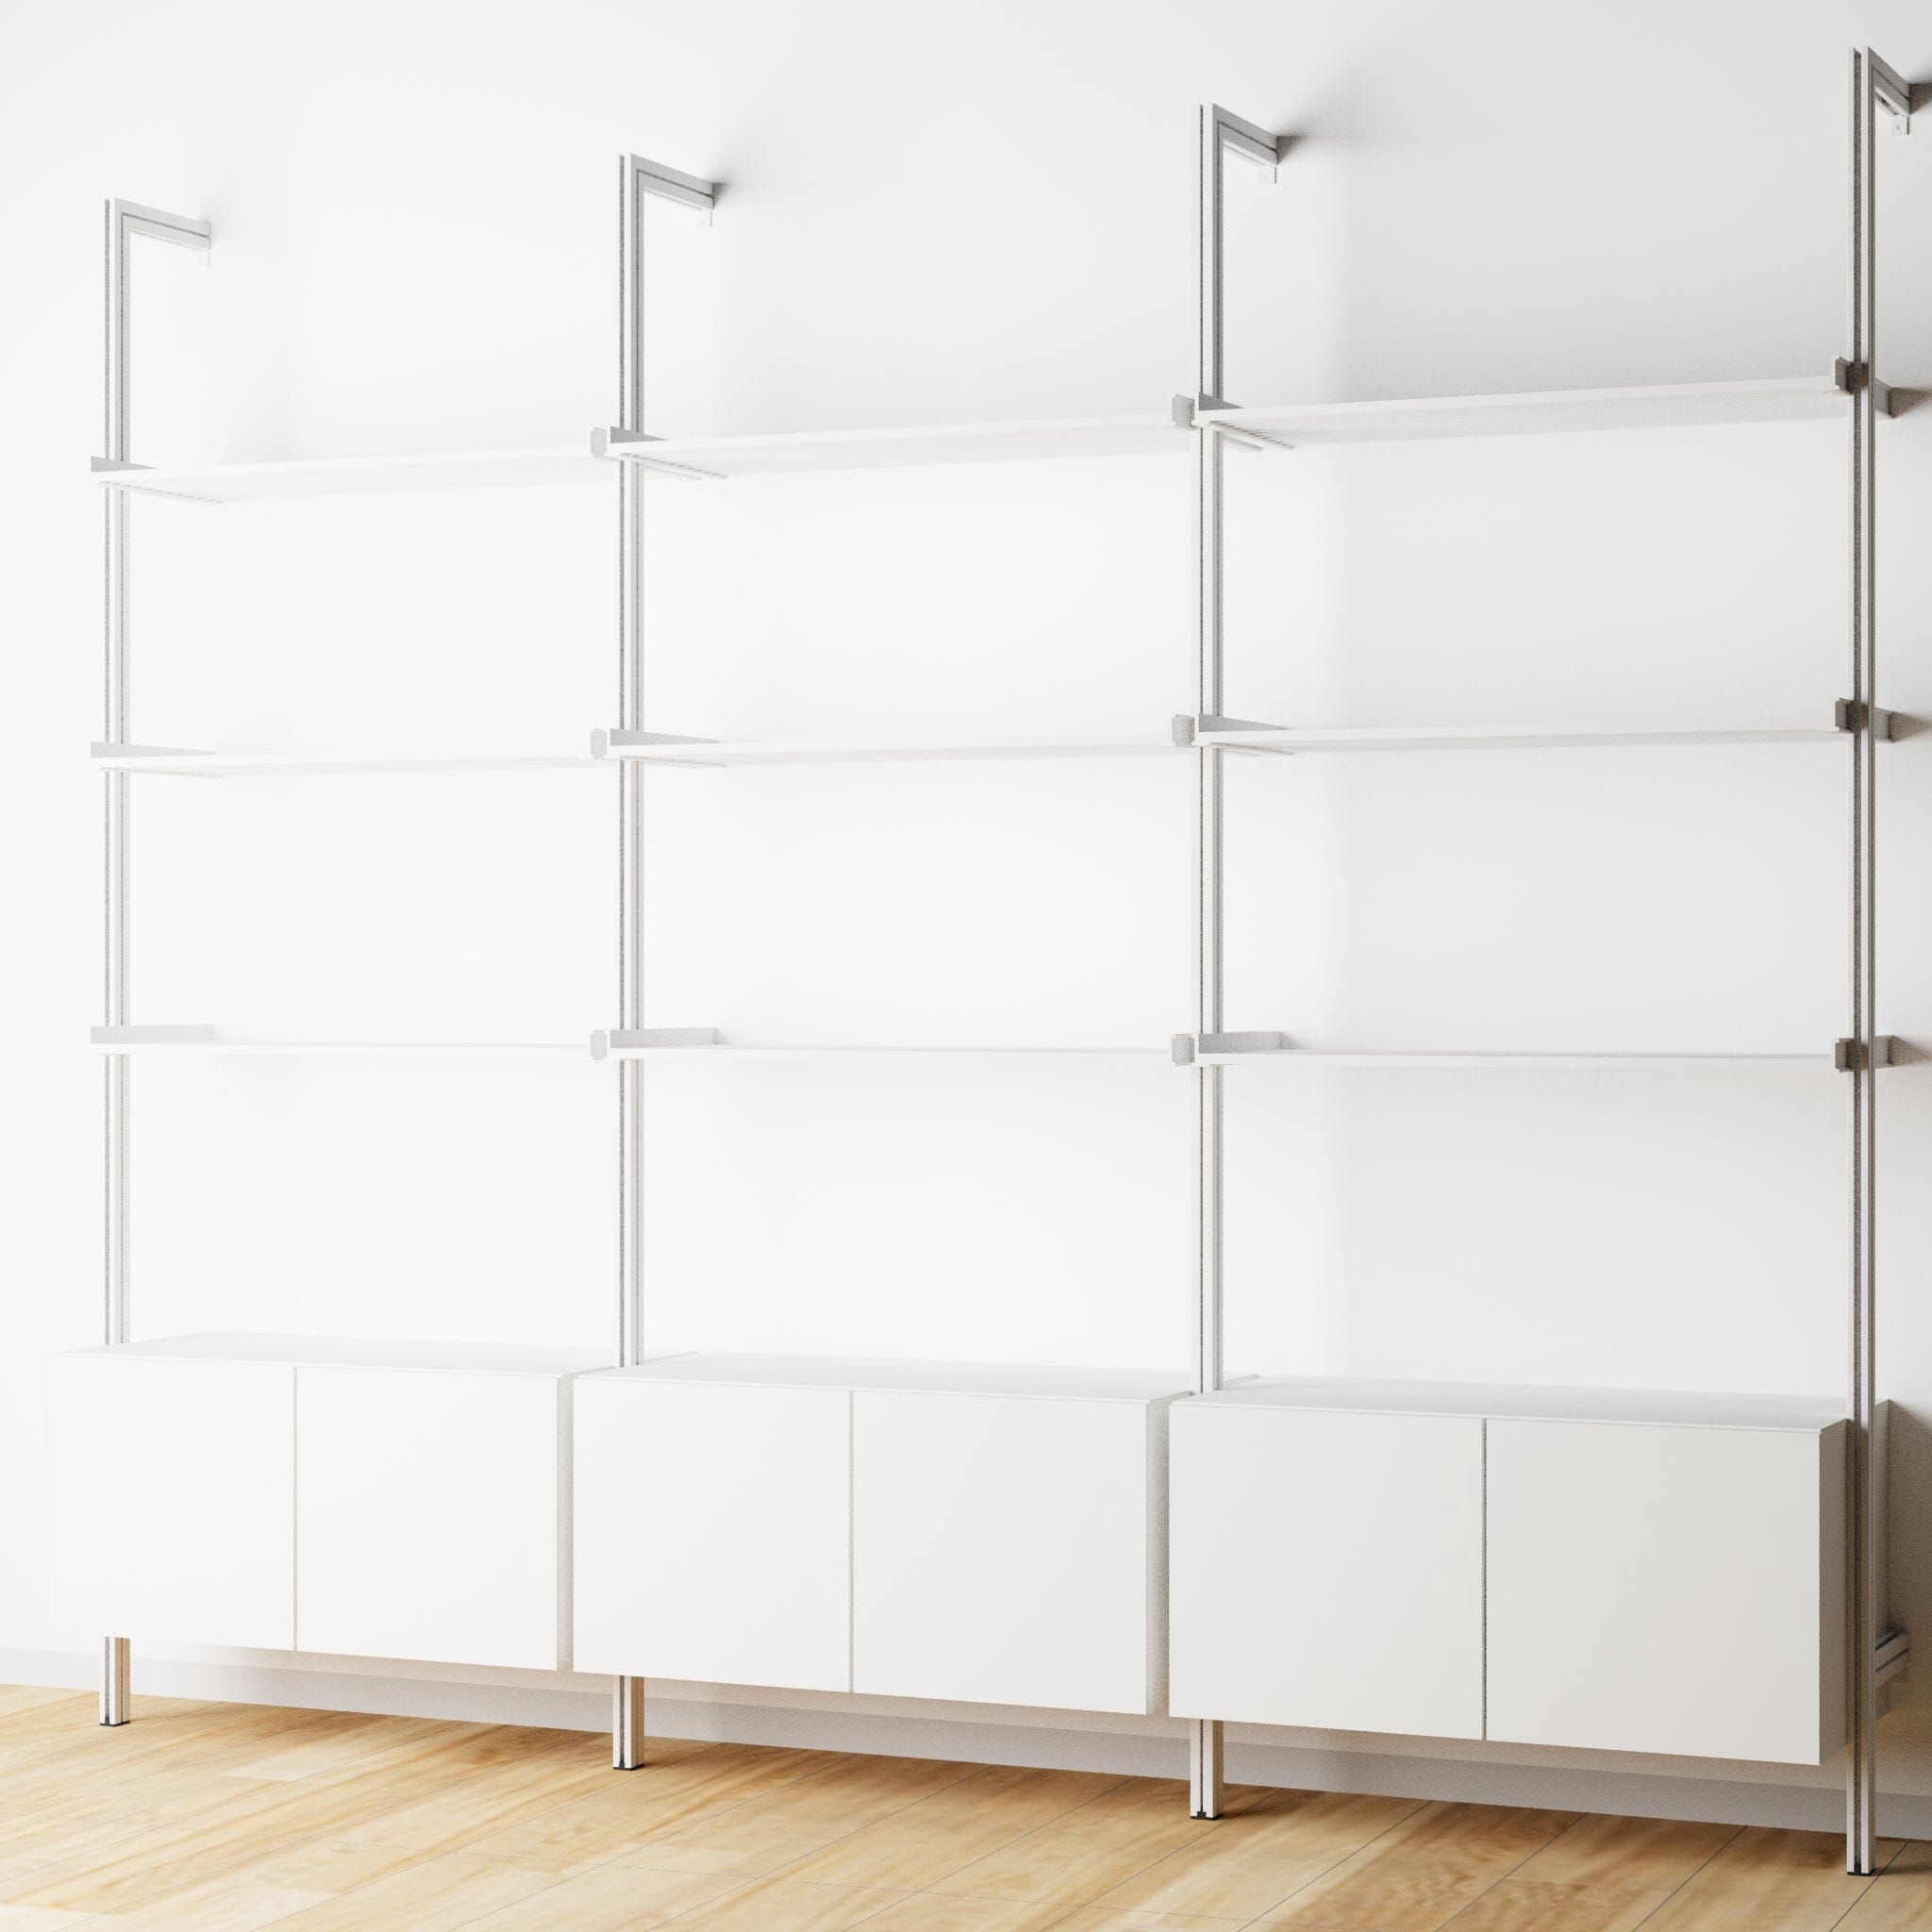 Modular Shelving Units - Aluminum Shelves + Wood Cabinets